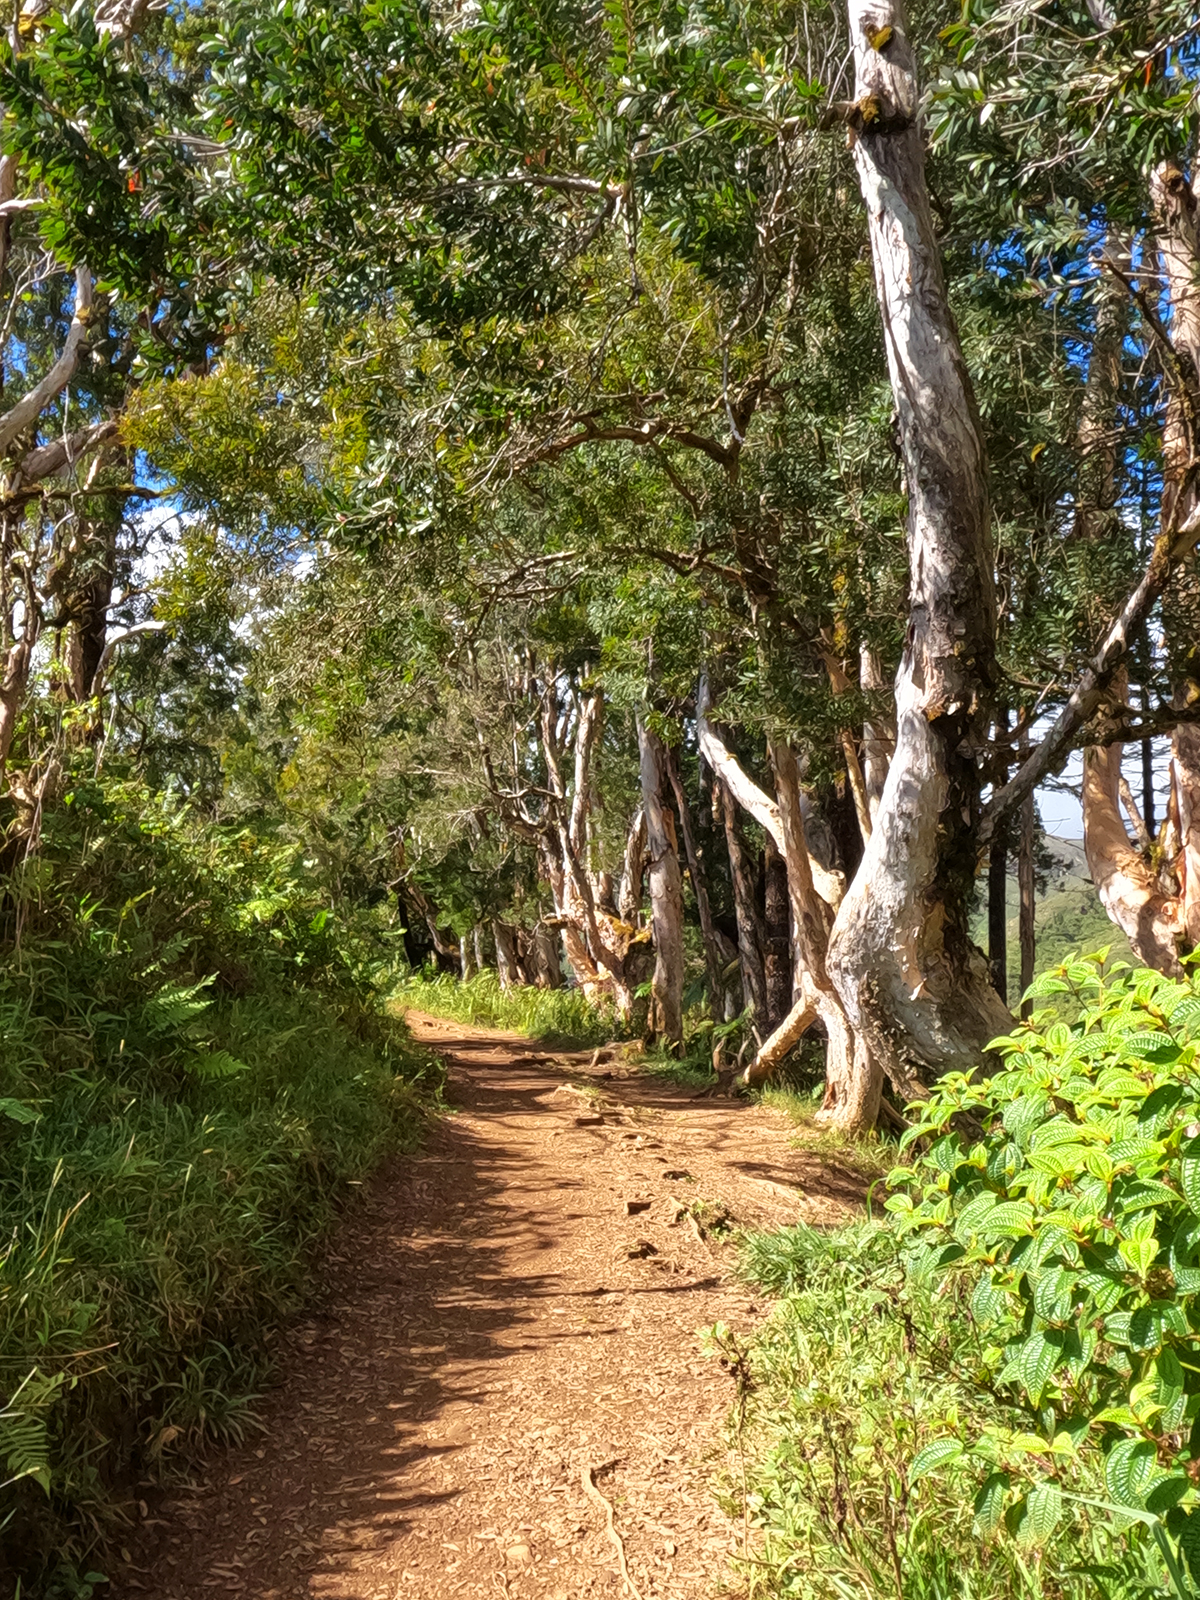 waihe'e ridge trail with trees and bushy foliage on sunny day